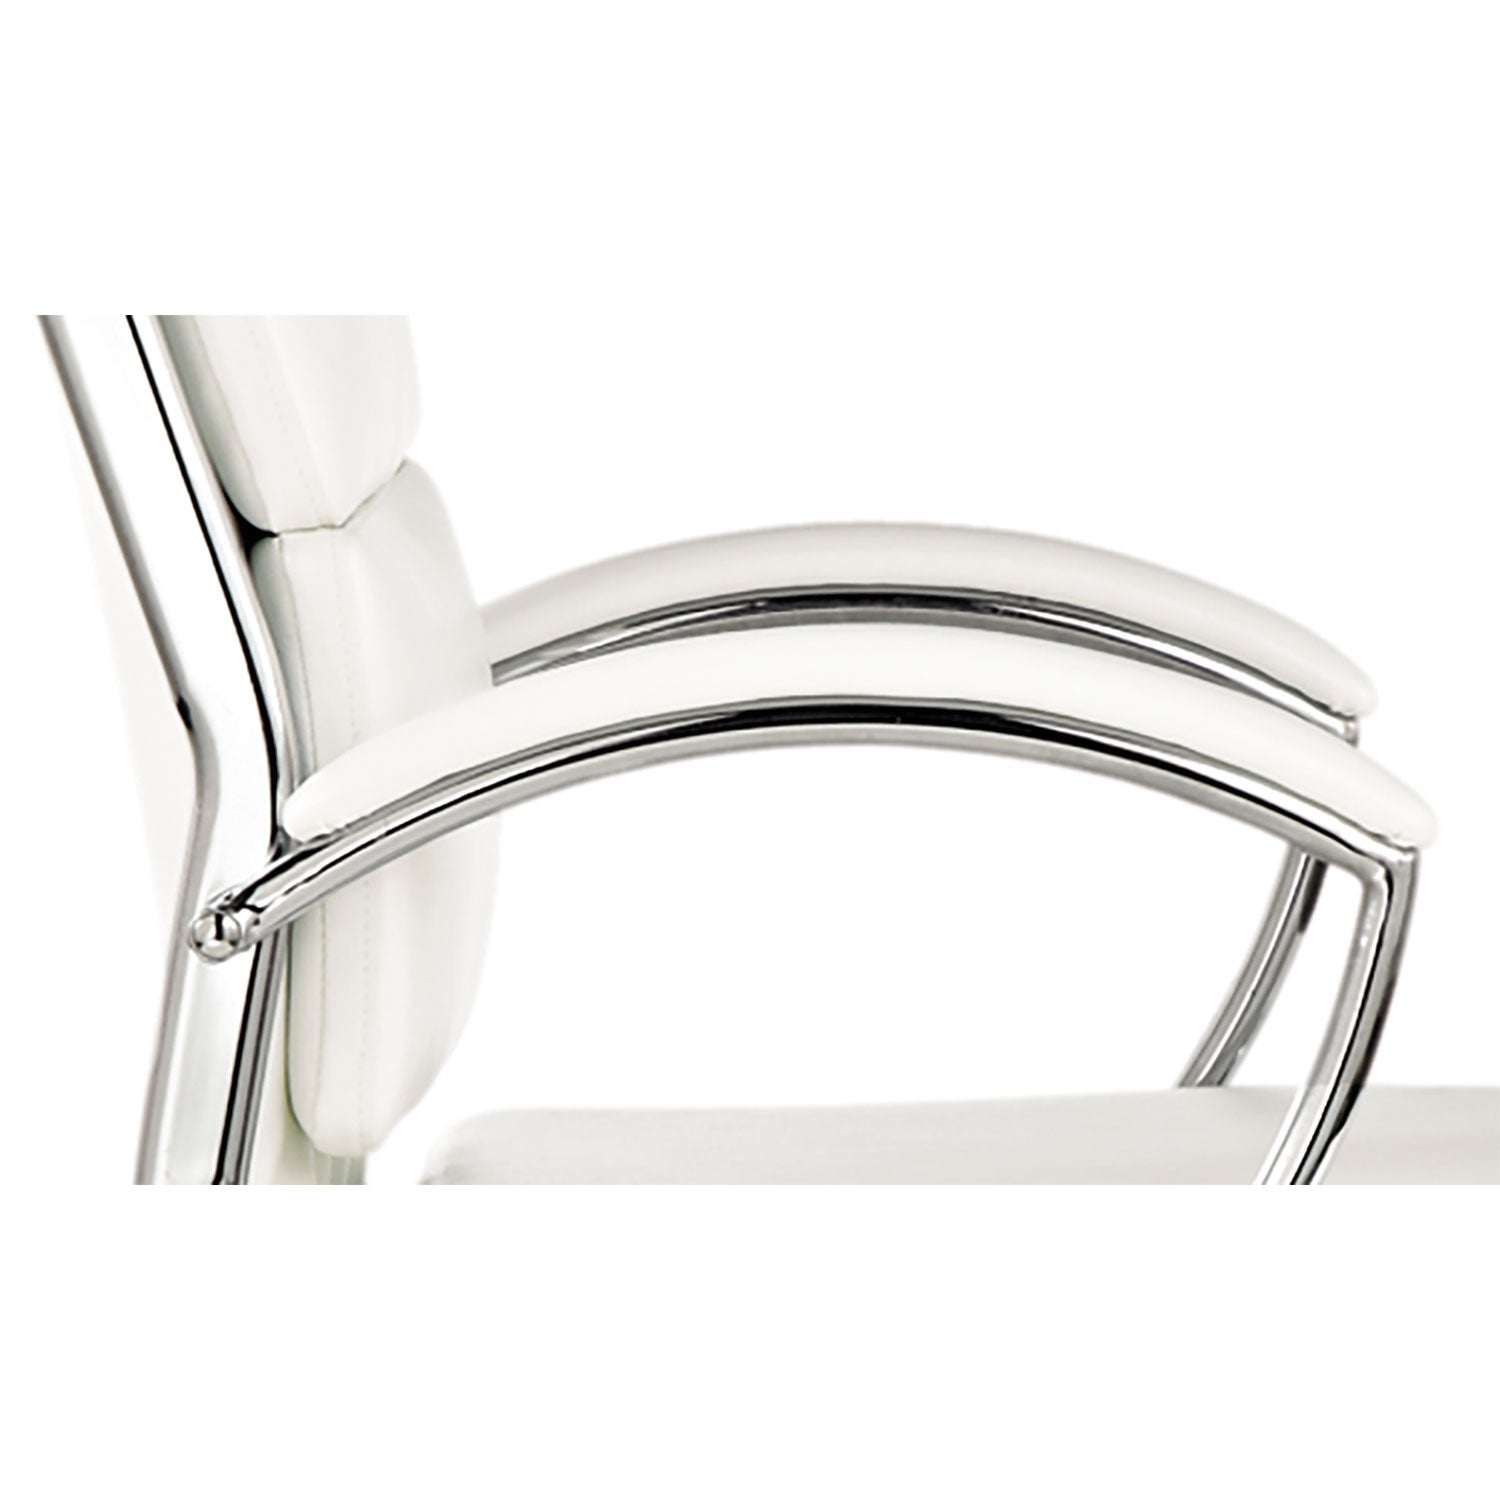 neratoli-series-replacement-arm-pads-for-alera-neratoli-series-chairs-faux-leather-177-x-1515-x-059-white-2-set_alenrap06 - 2